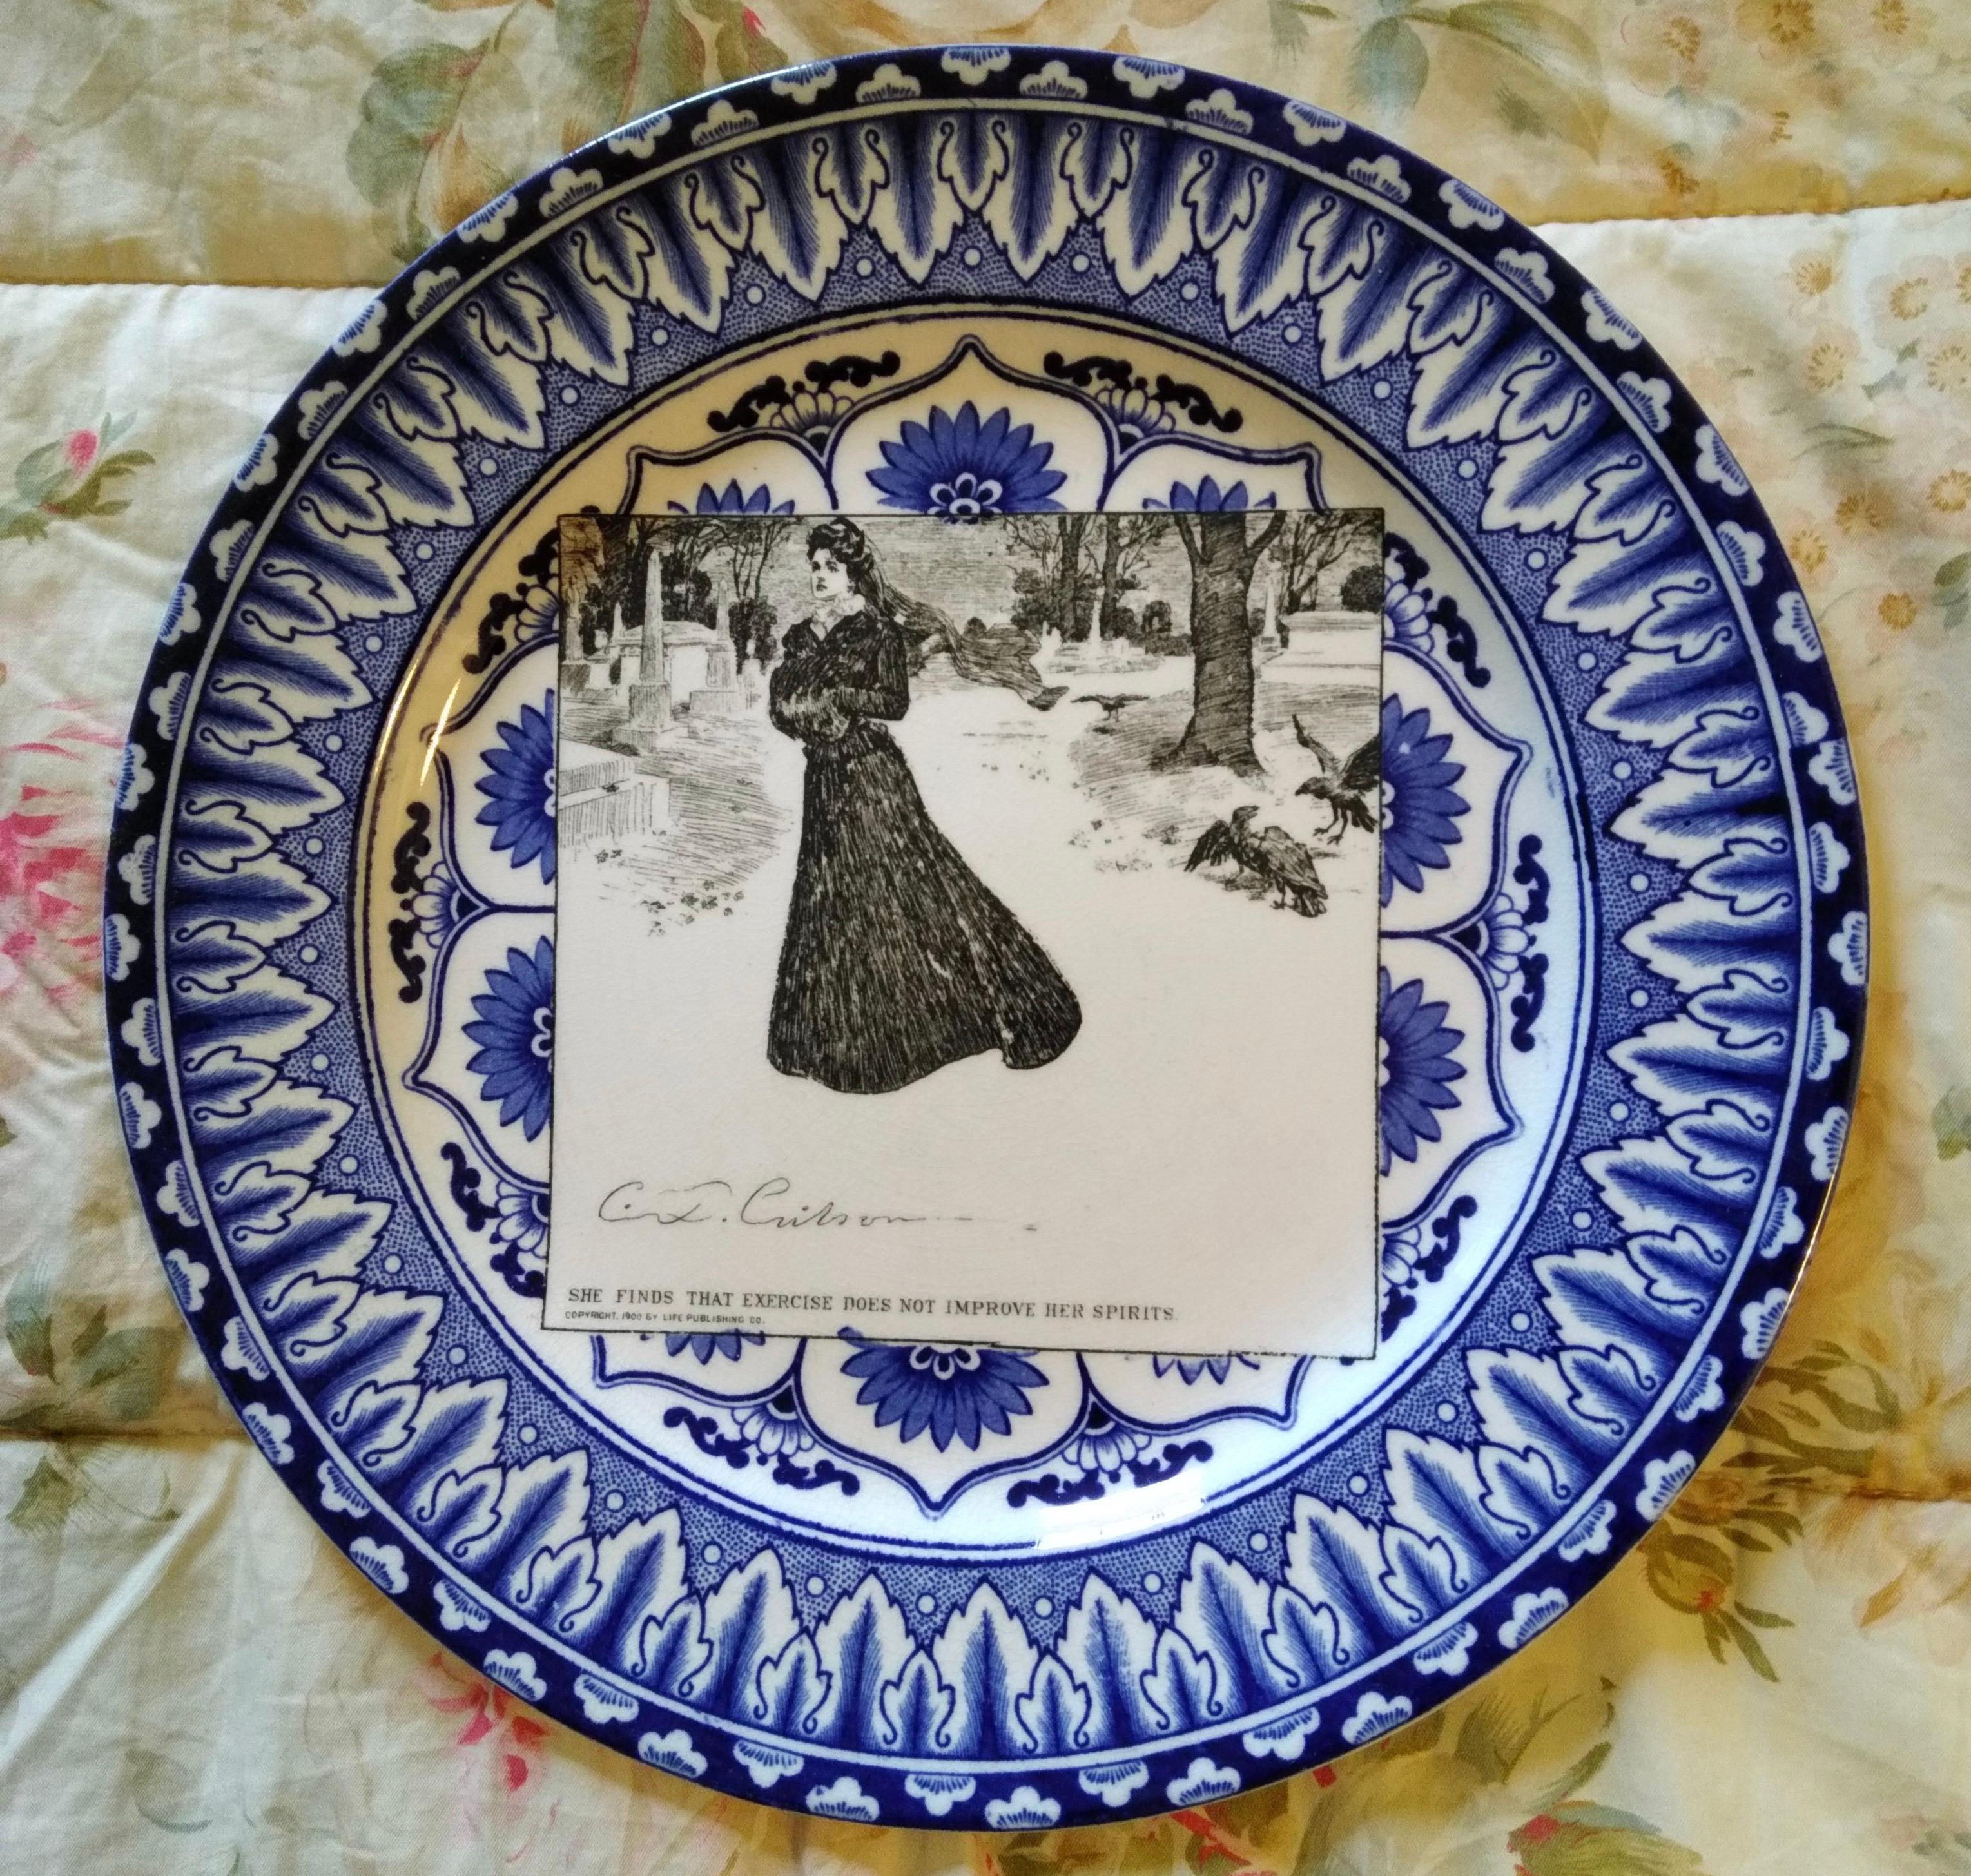 Royal Doulton Decorative Plates Featuring Charles Dana Gibson Illustrations 1